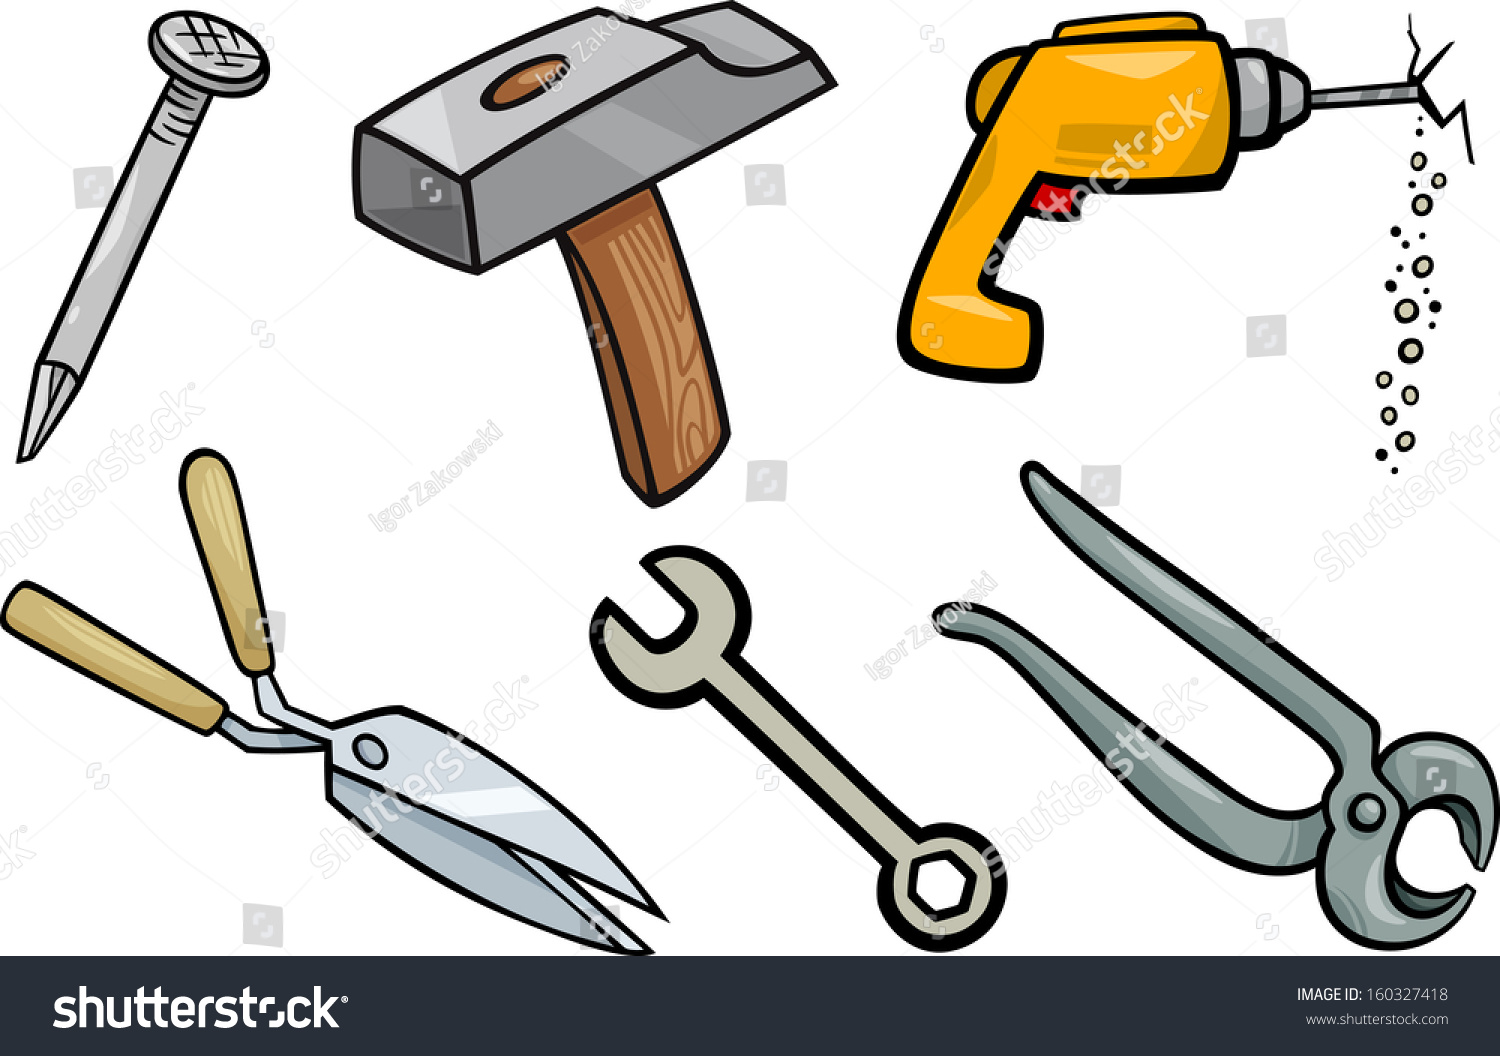 carpentry tools clip art free - photo #22